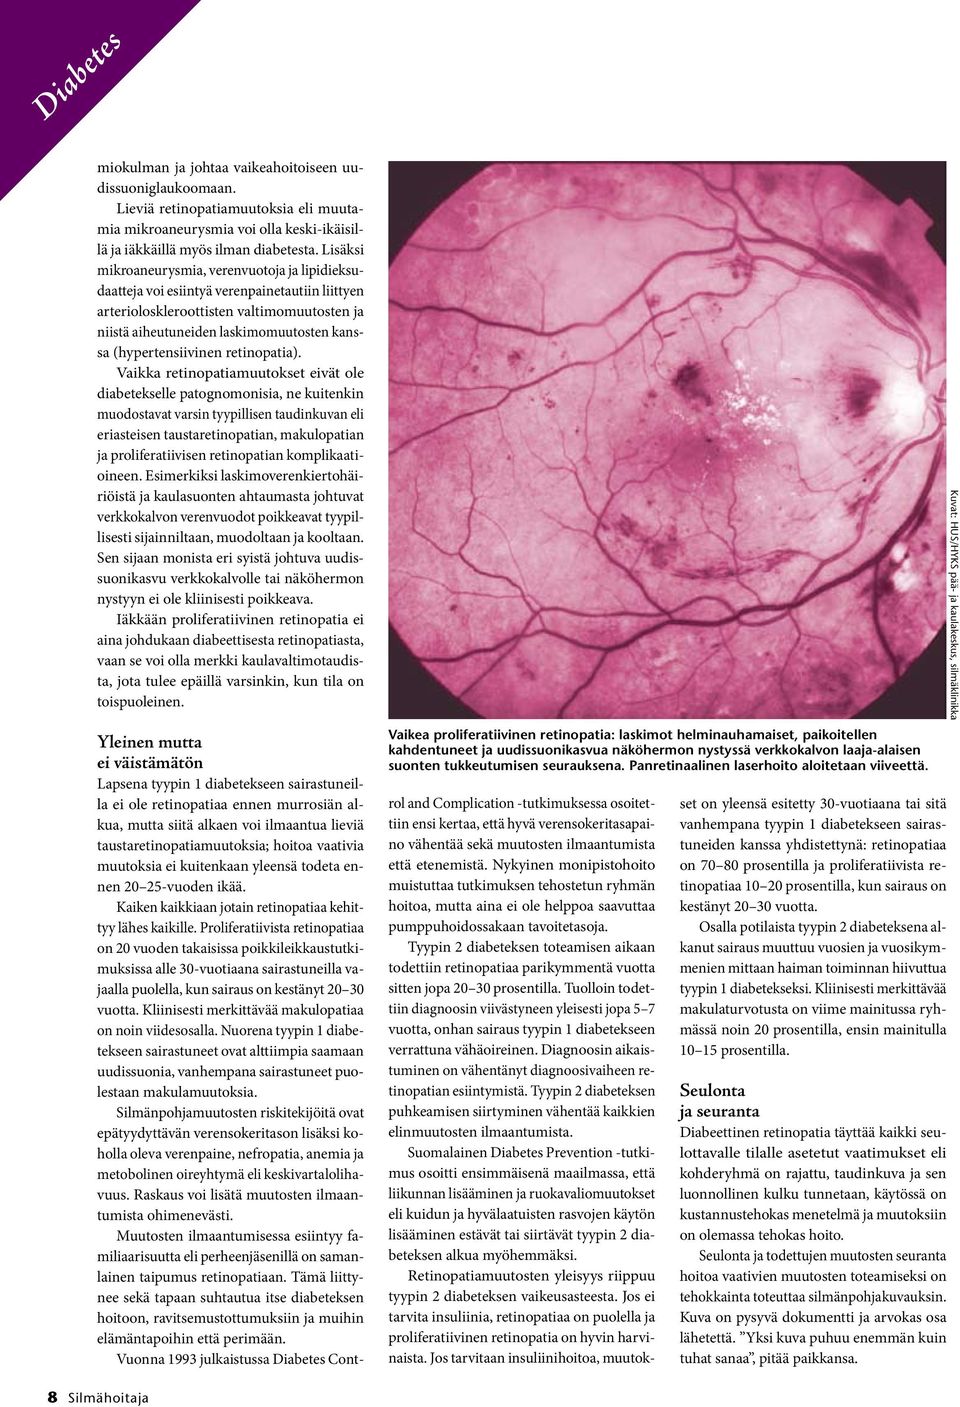 (hypertensiivinen retinopatia).